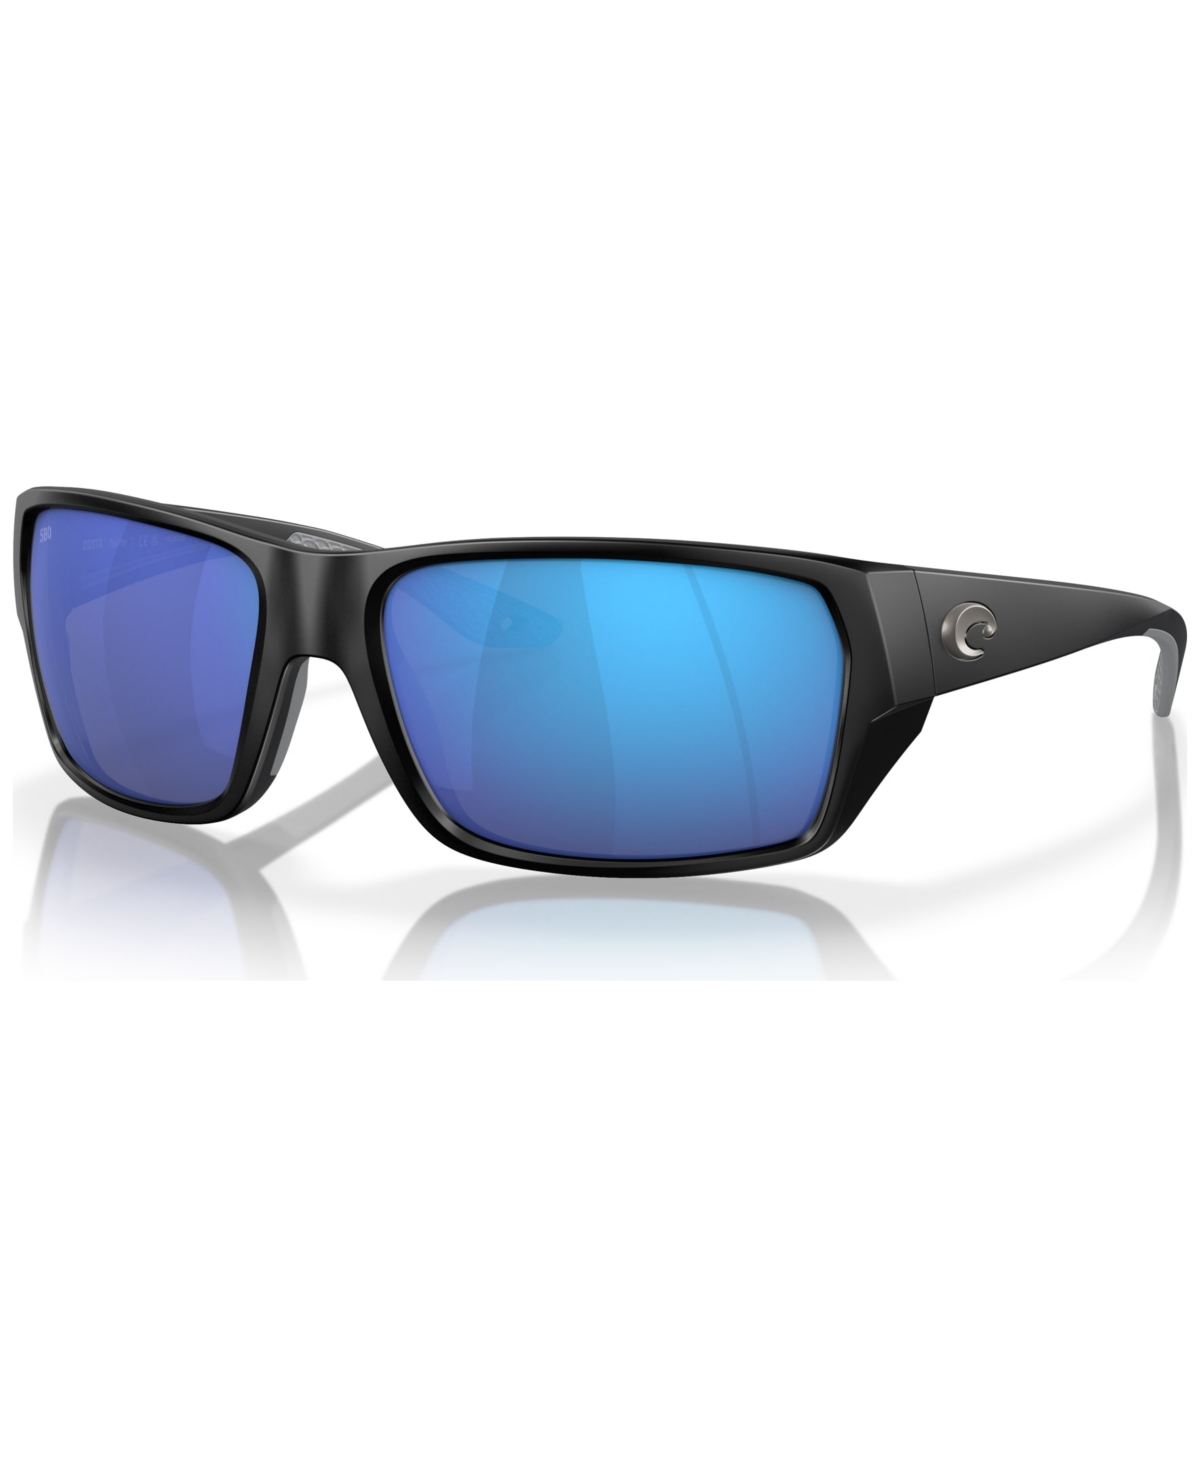 Men's Tailfin Polarized Sunglasses, Mirror 6S9113 - Black, Blue